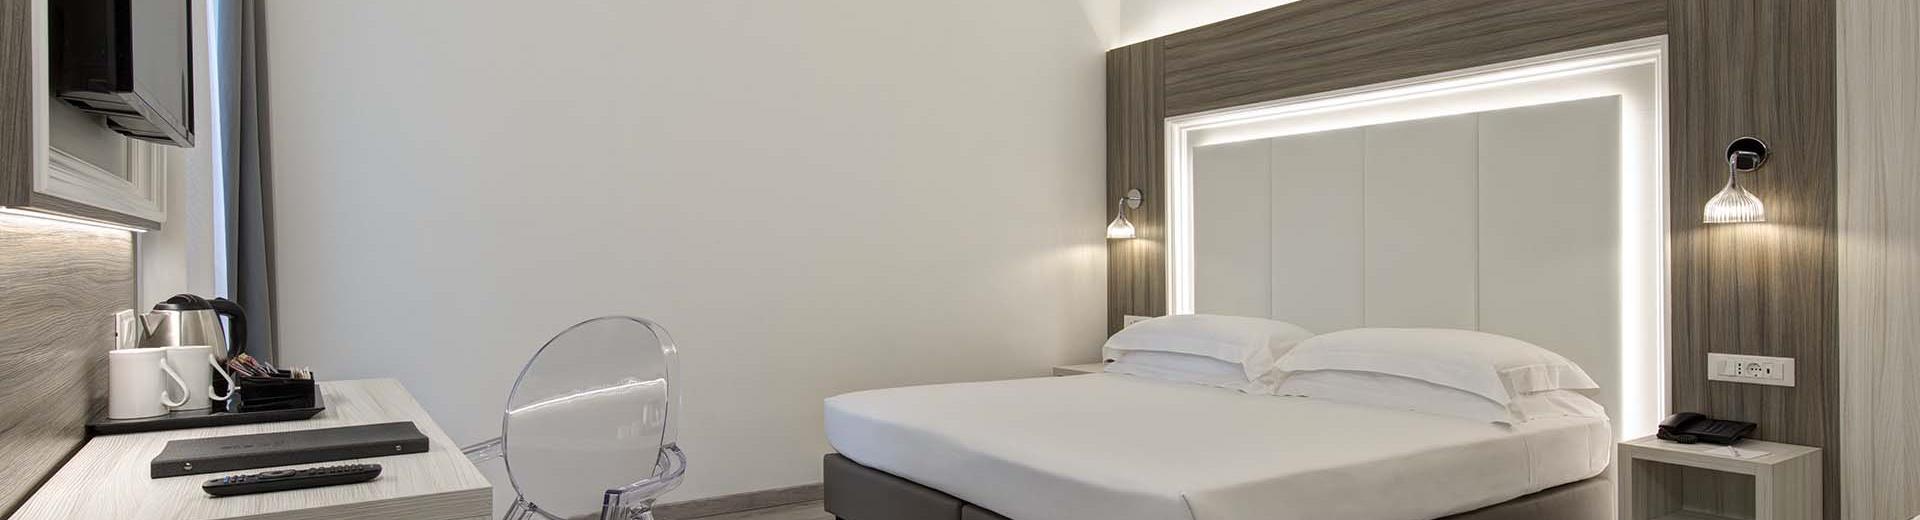 Double Room - Hotel San Giusto Trieste